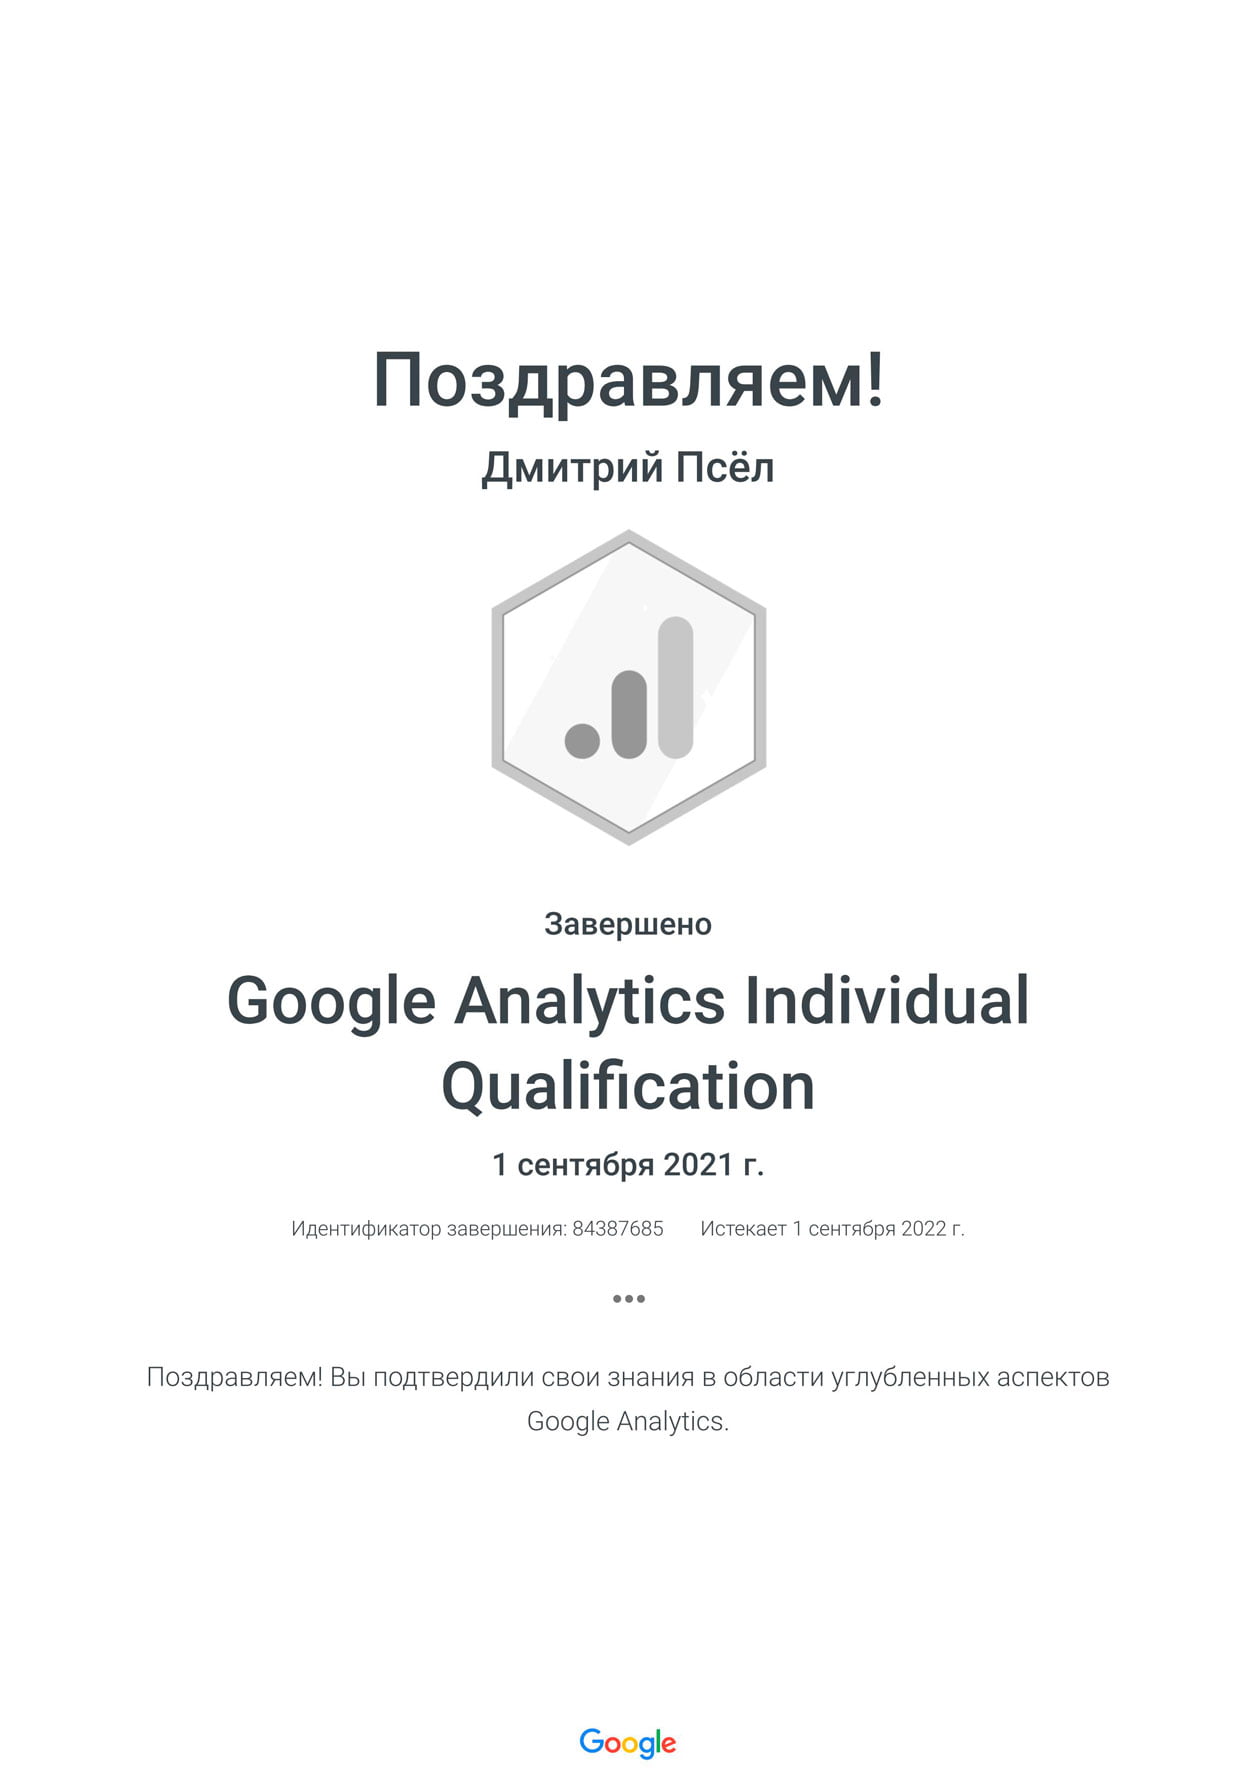 Дмитрий Псёл - сетрификат Google Analytics Individual Qualification